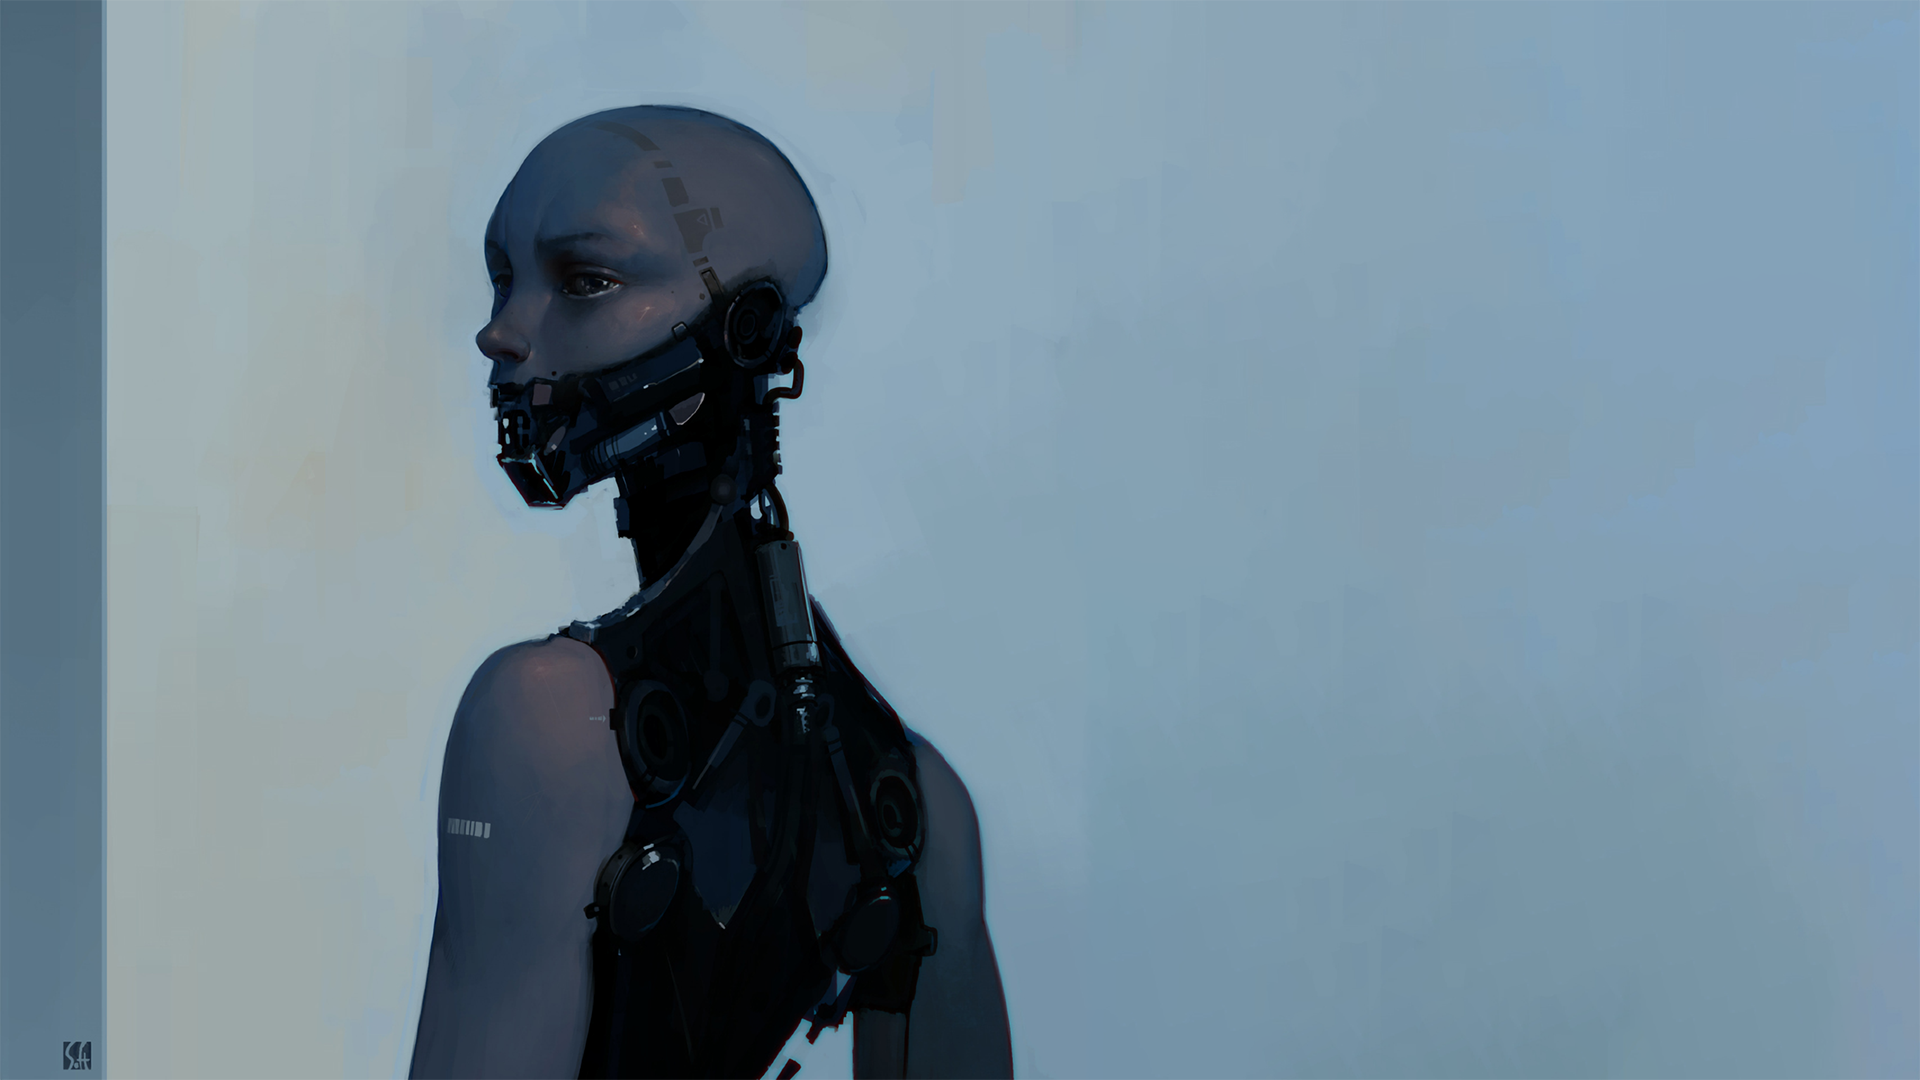 Robot Science Fiction Artwork Futuristic Digital Art Techno Punk Neo Noir 1920x1080